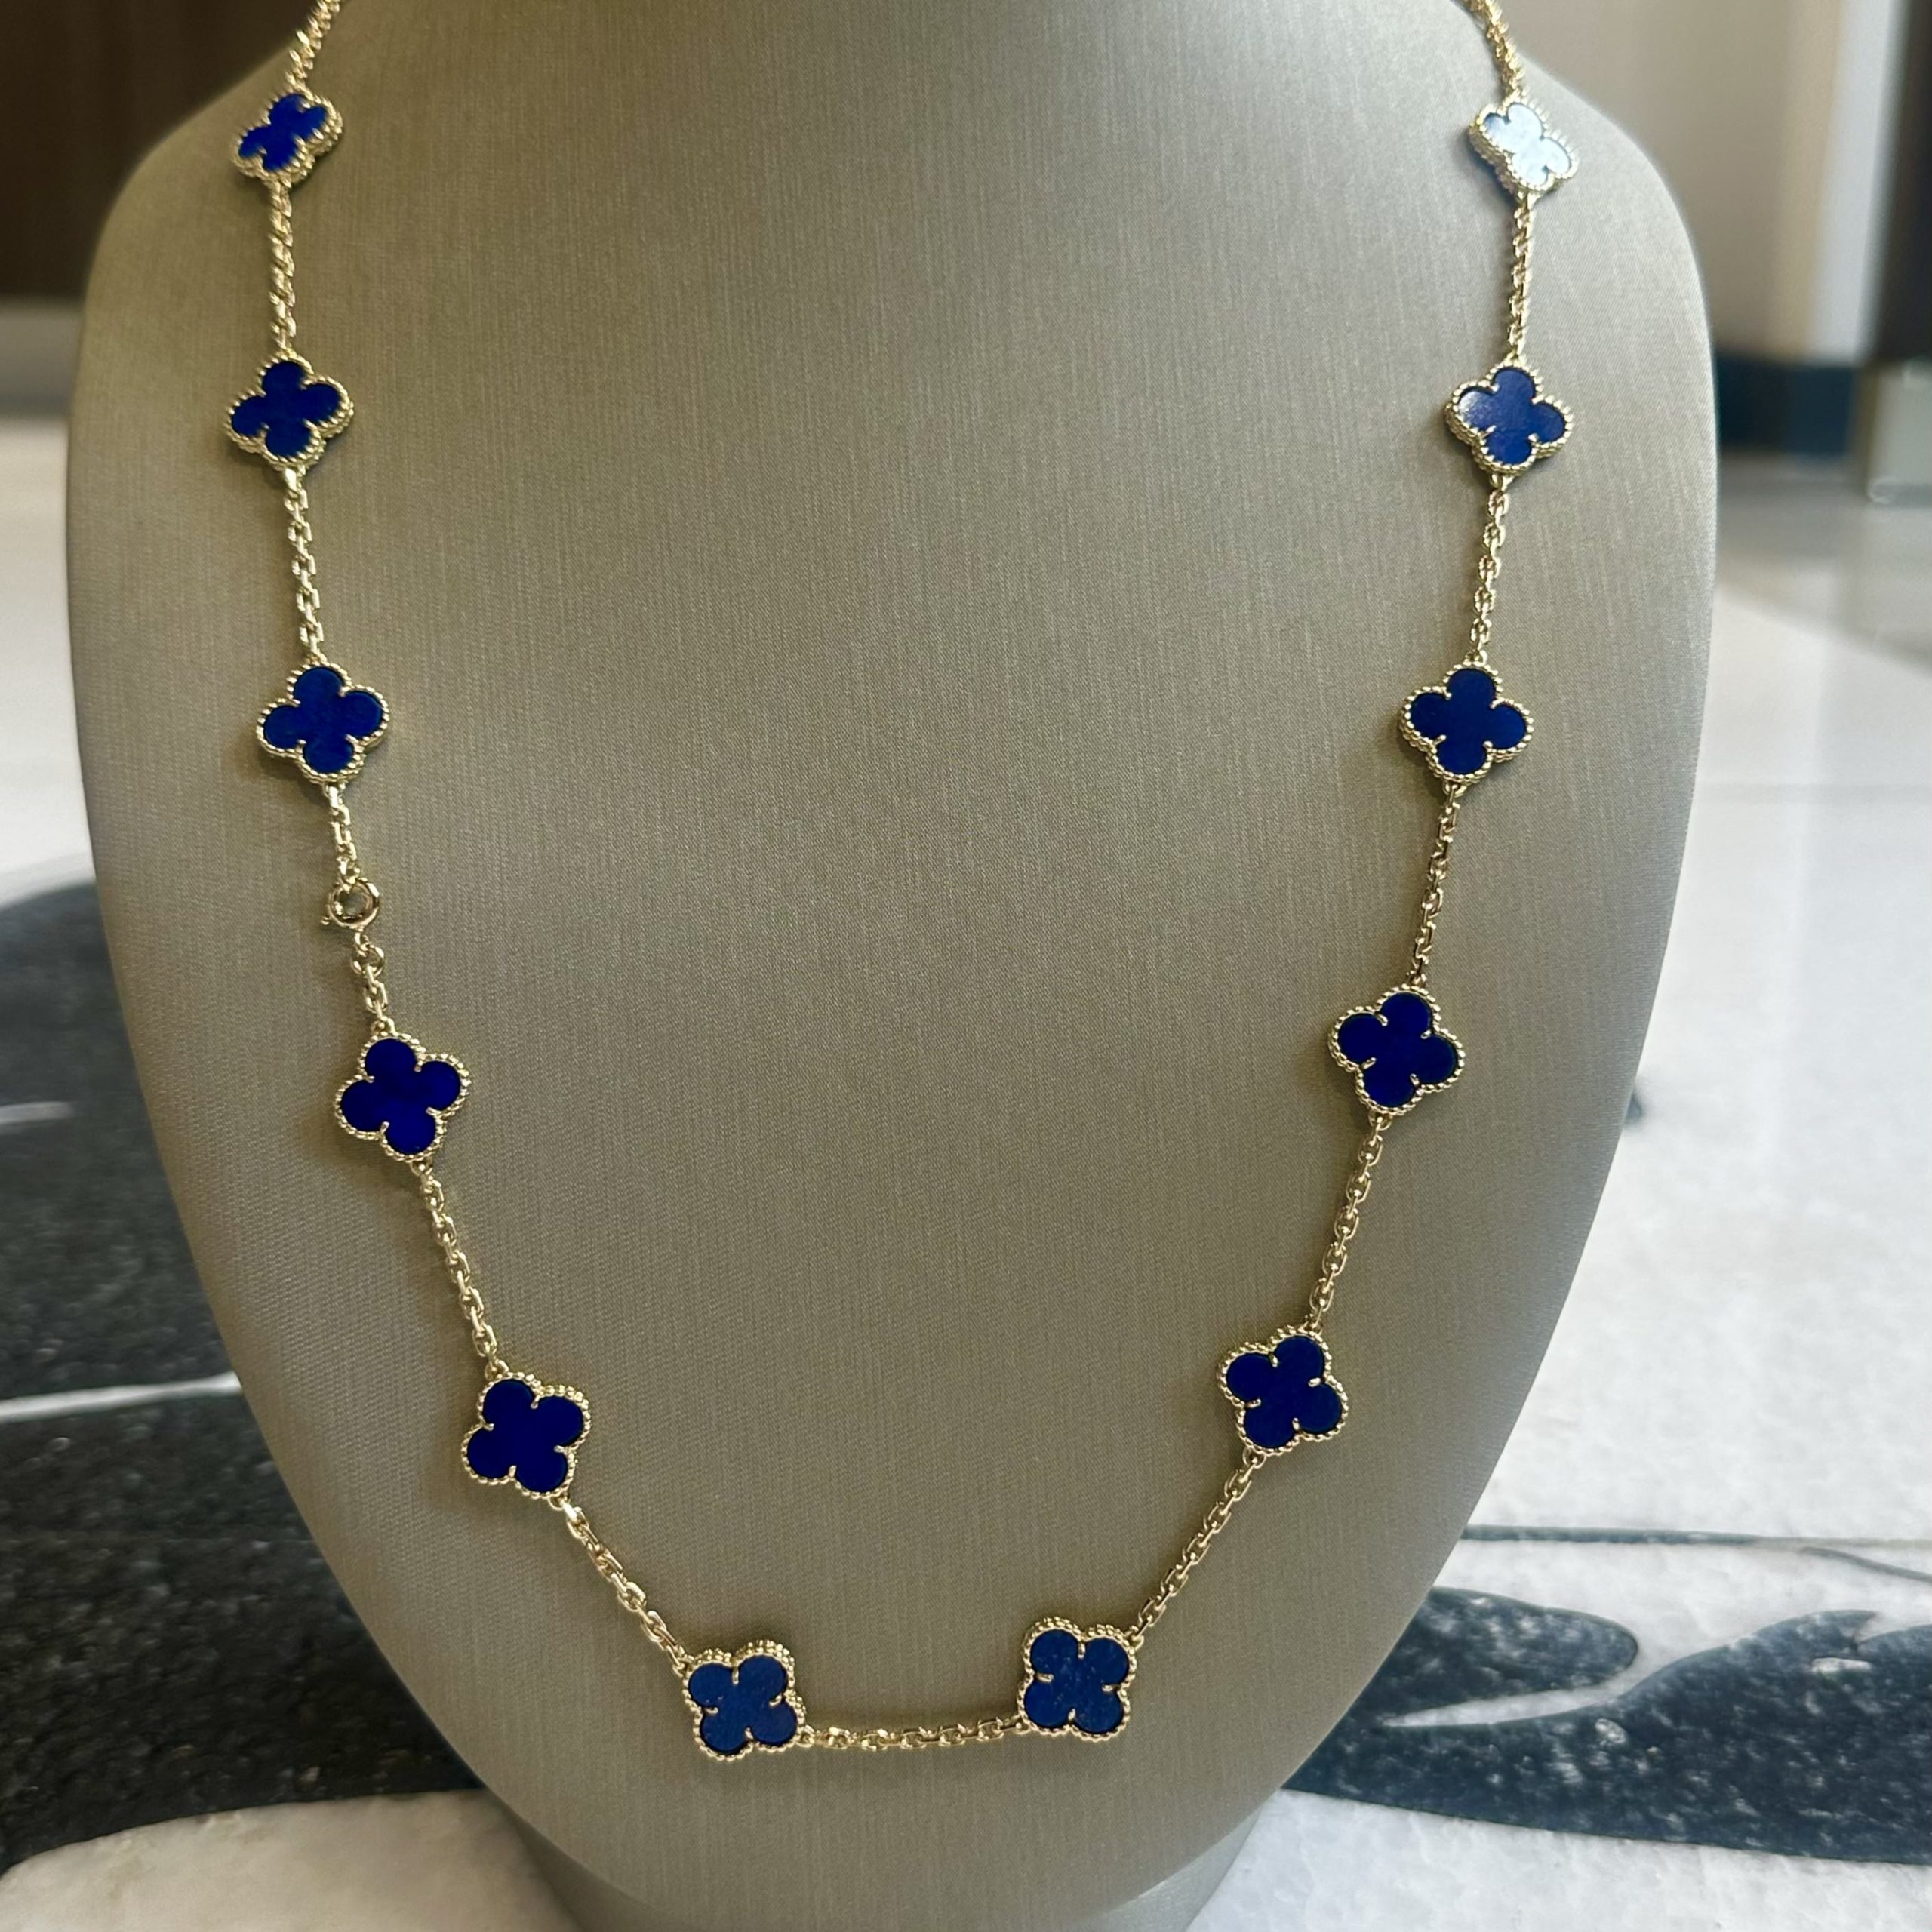 Van Cleef & Arpels Alhambra Lapis Lazuli Necklace